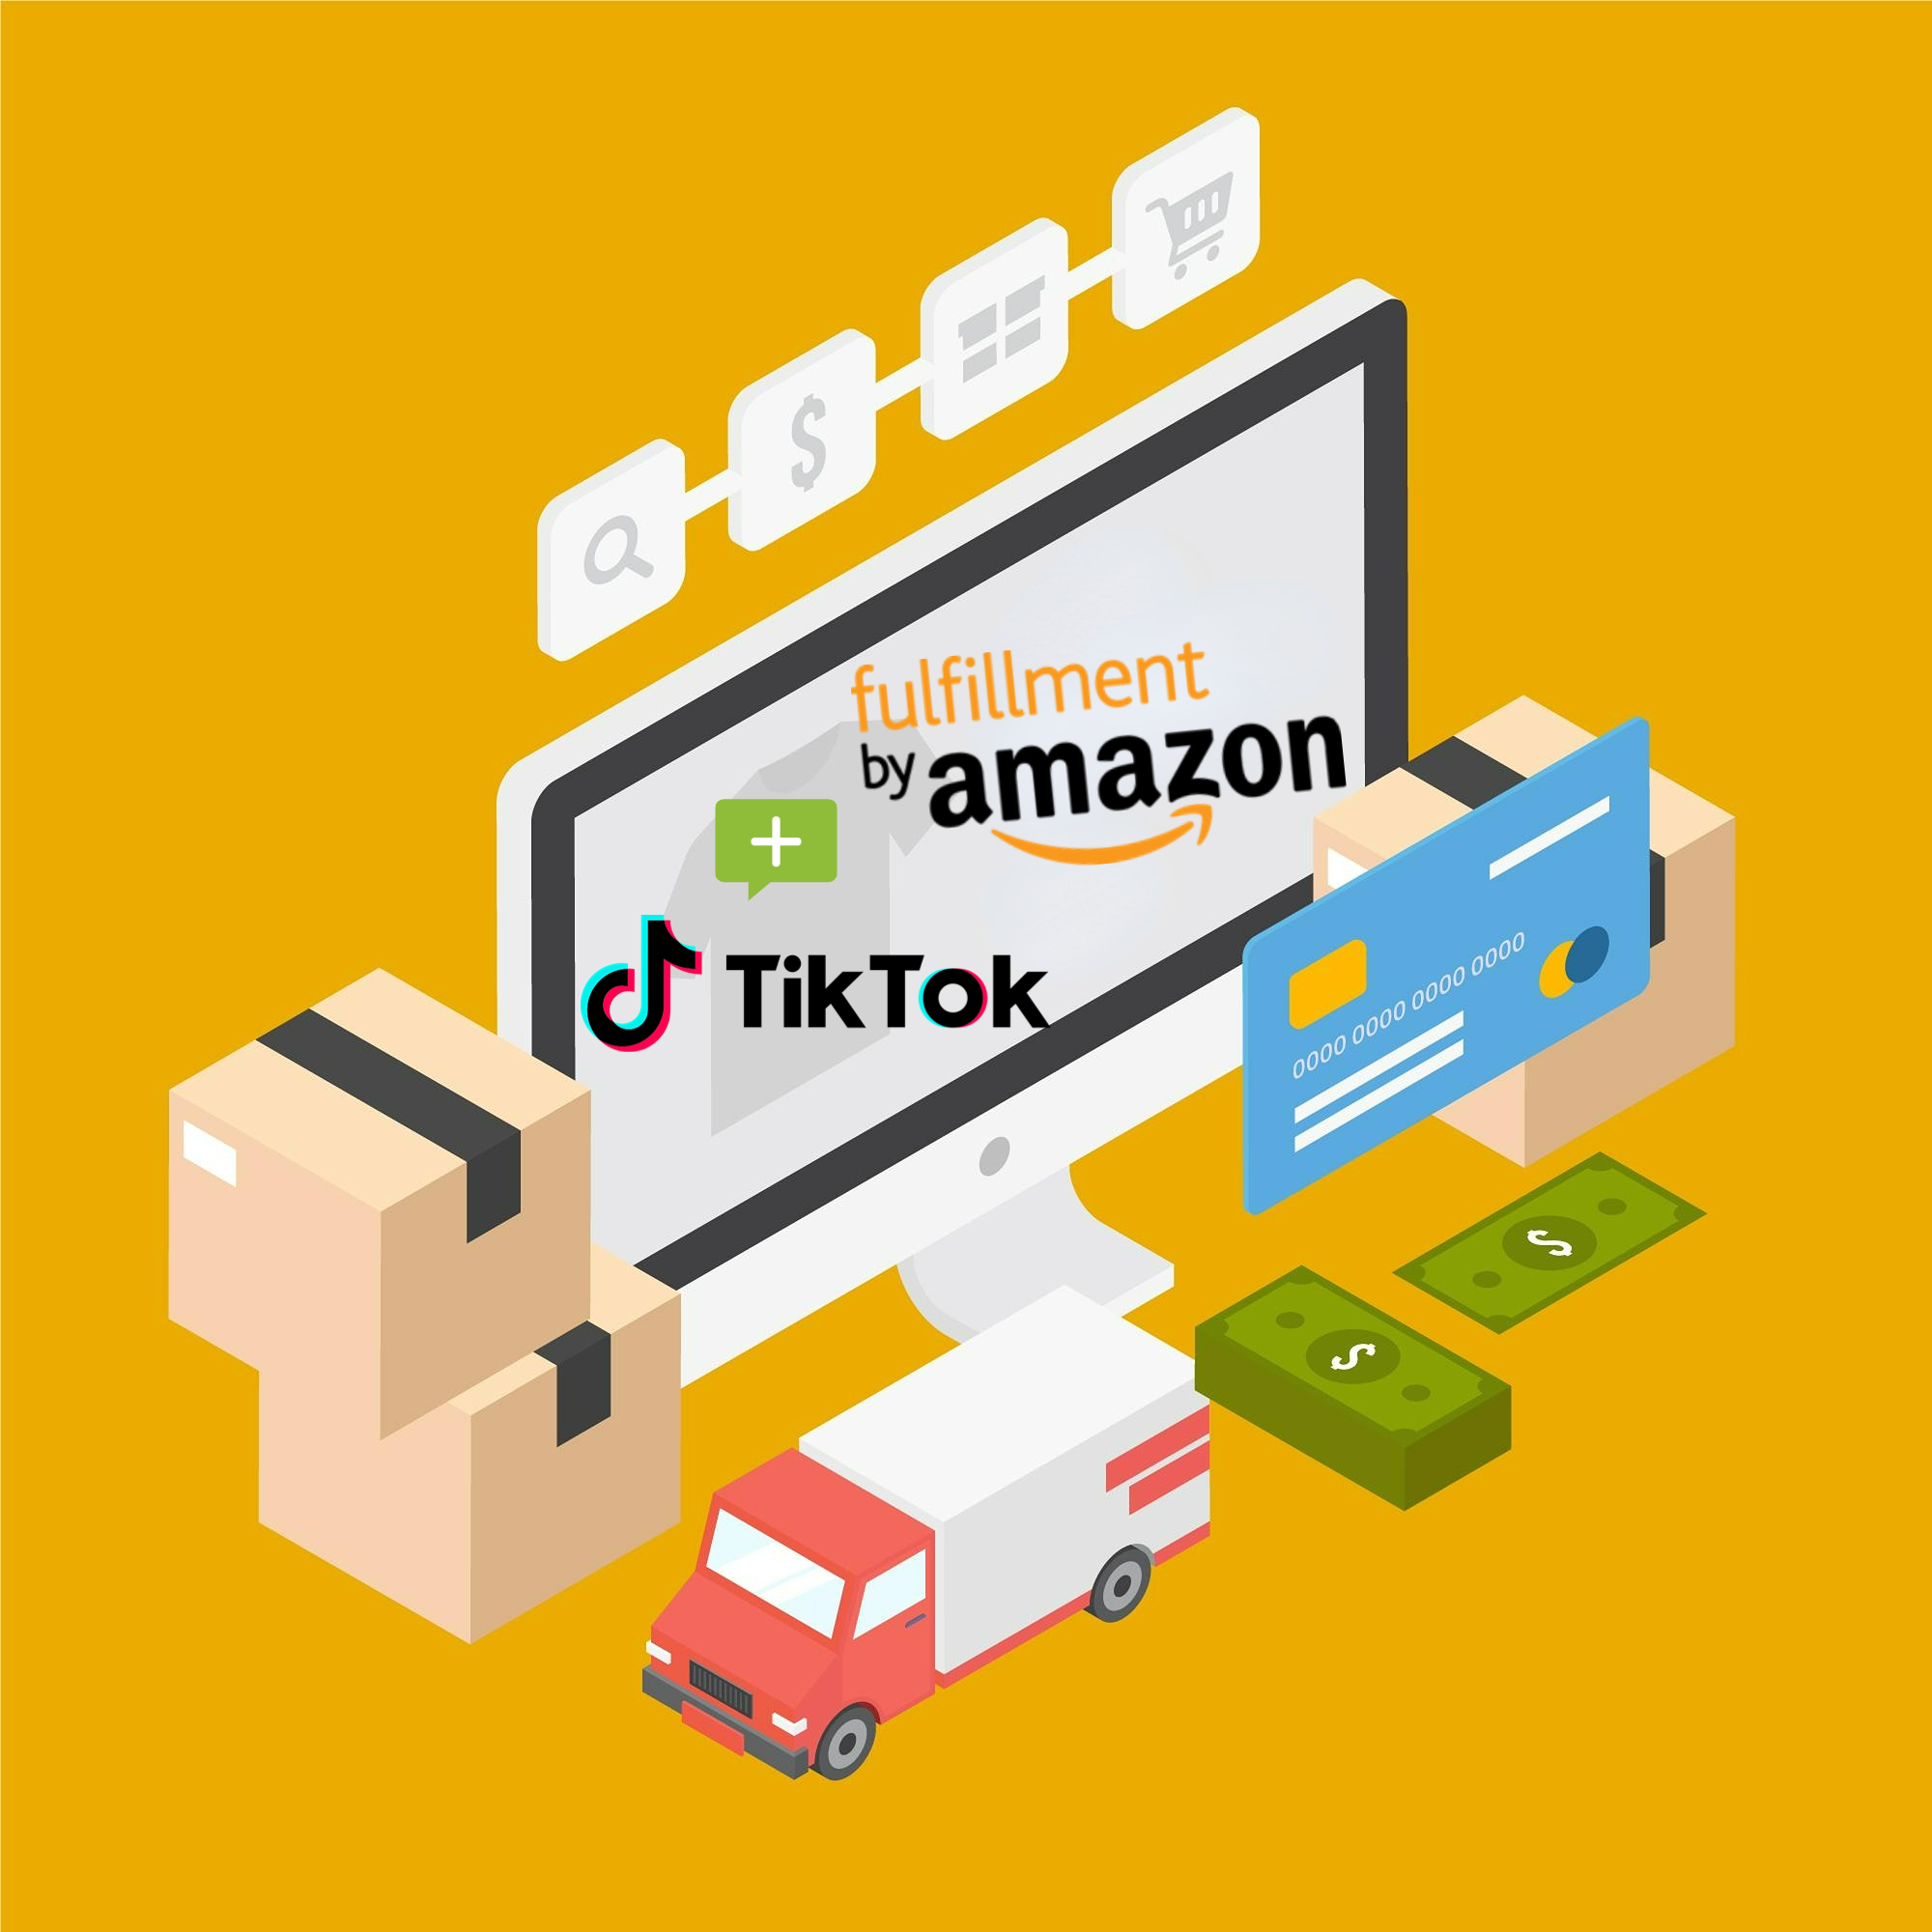 How to Use Amazon MCF/FBA to Fulfill TikTok Shop Orders?